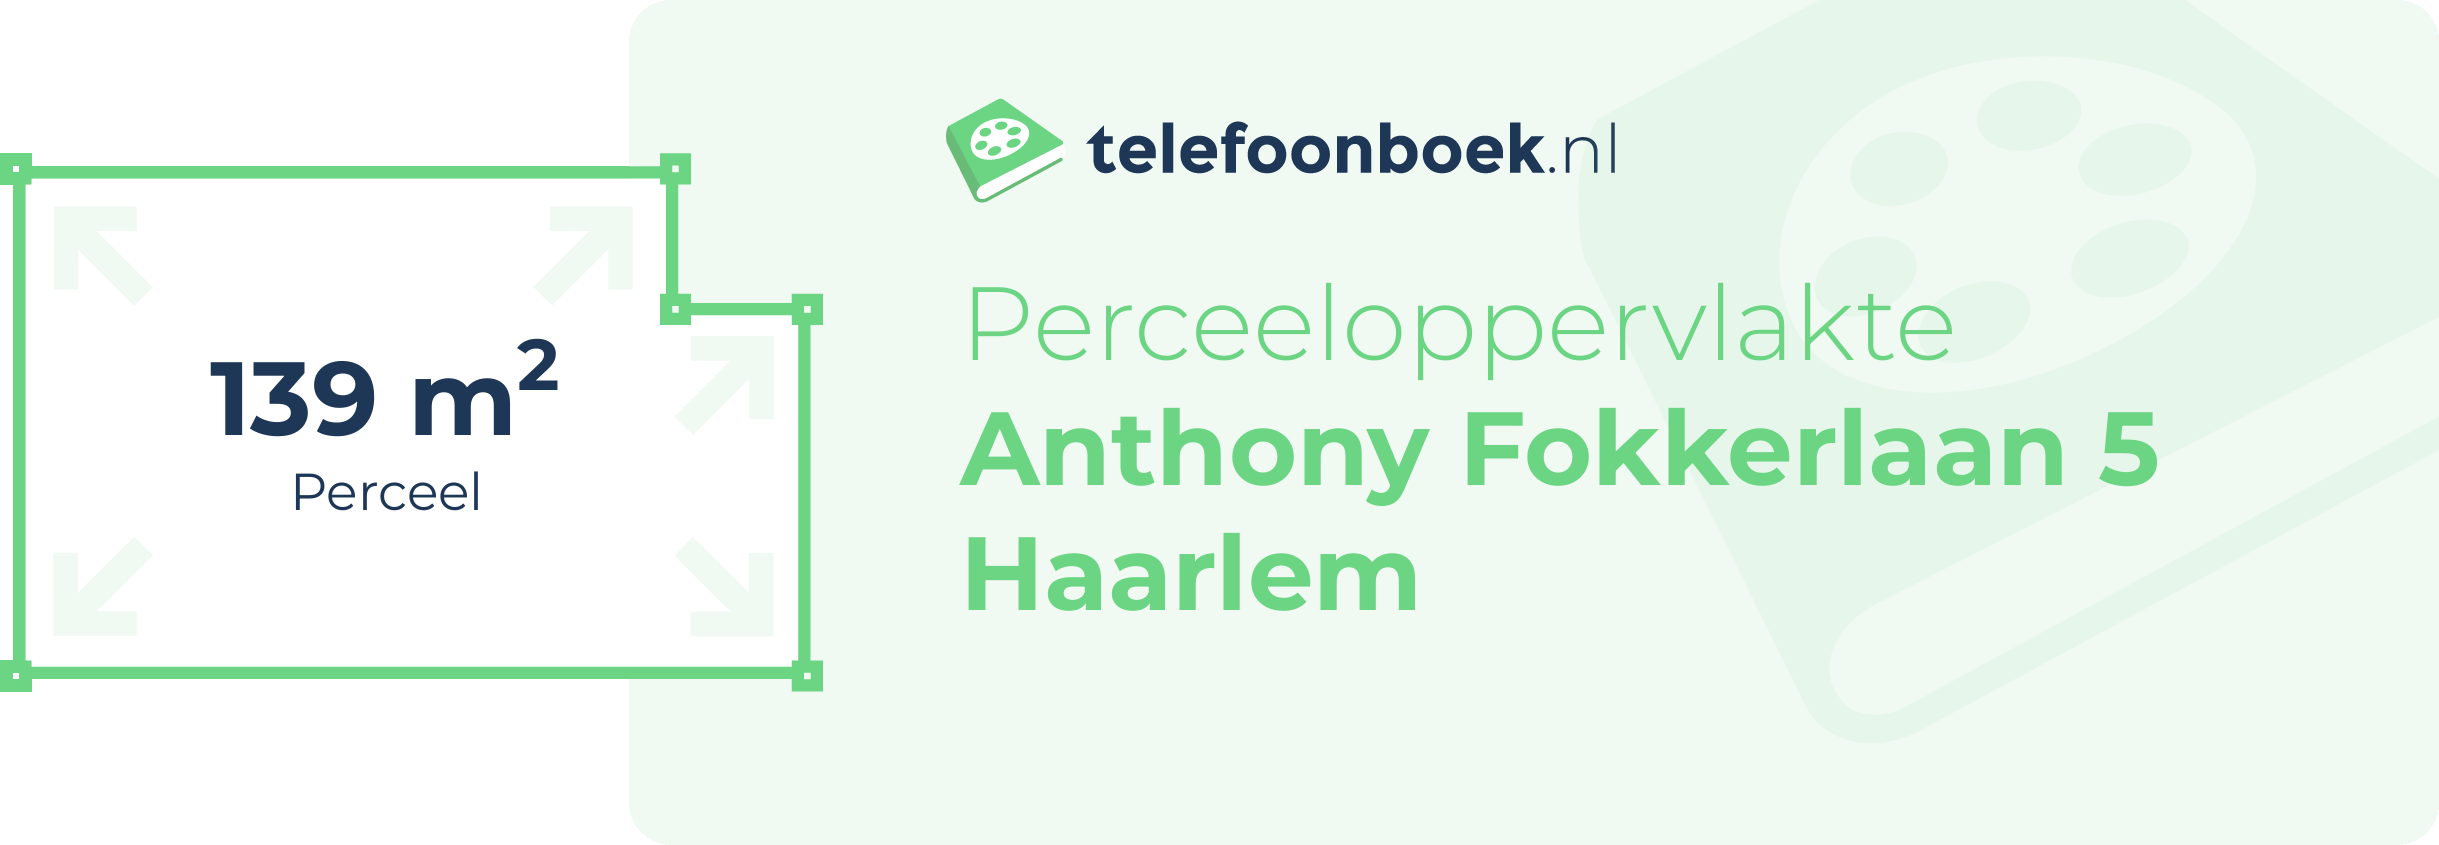 Perceeloppervlakte Anthony Fokkerlaan 5 Haarlem